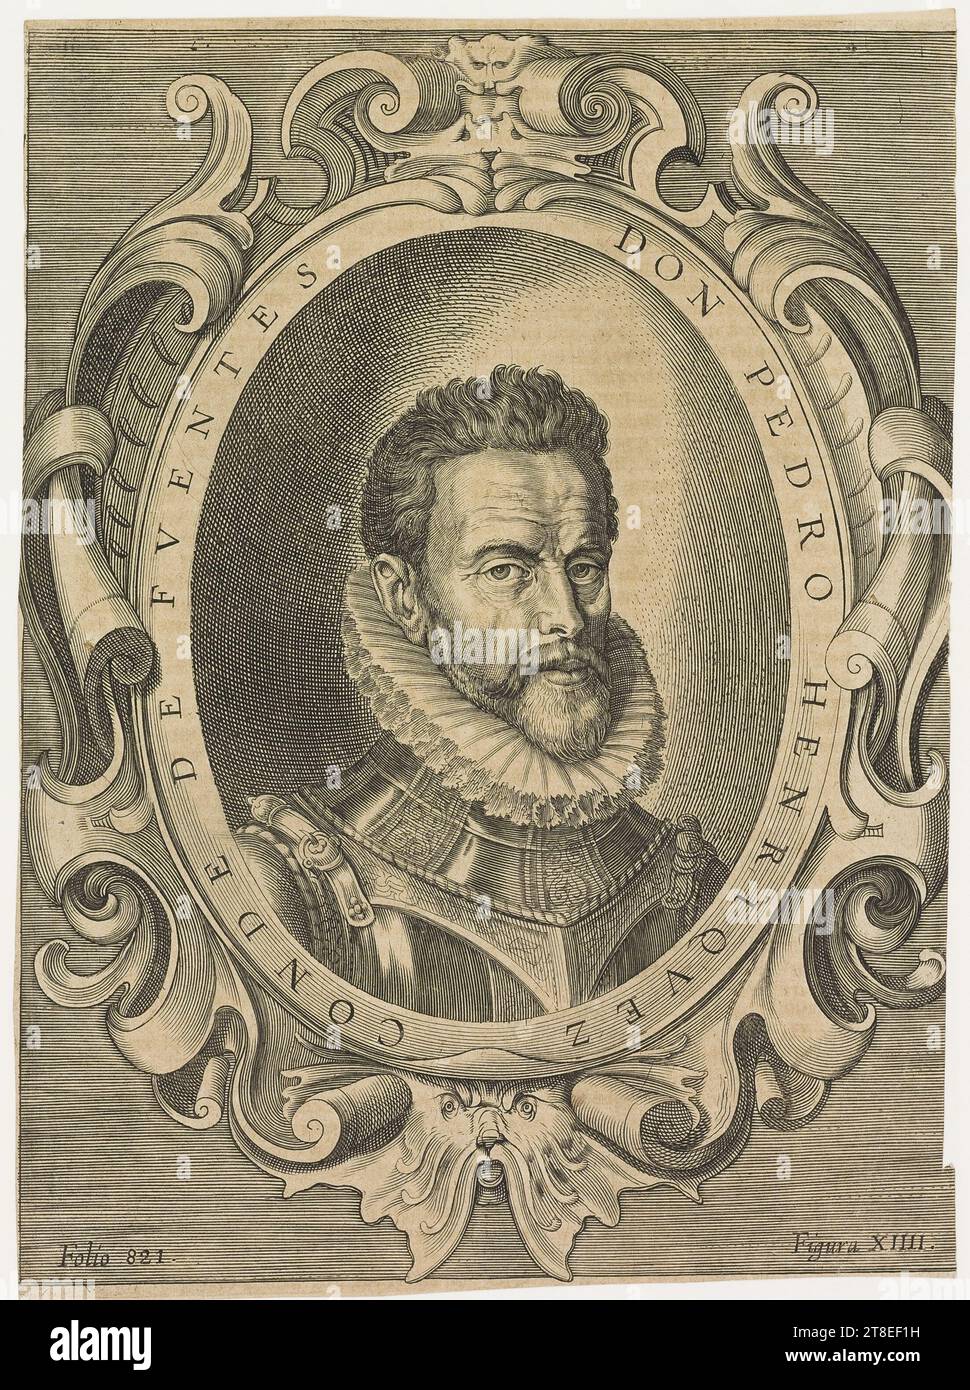 DON PEDRO HENRIQUEZ CONDE DE FVENTES. Folio 821. Figura XIIII Stock Photo